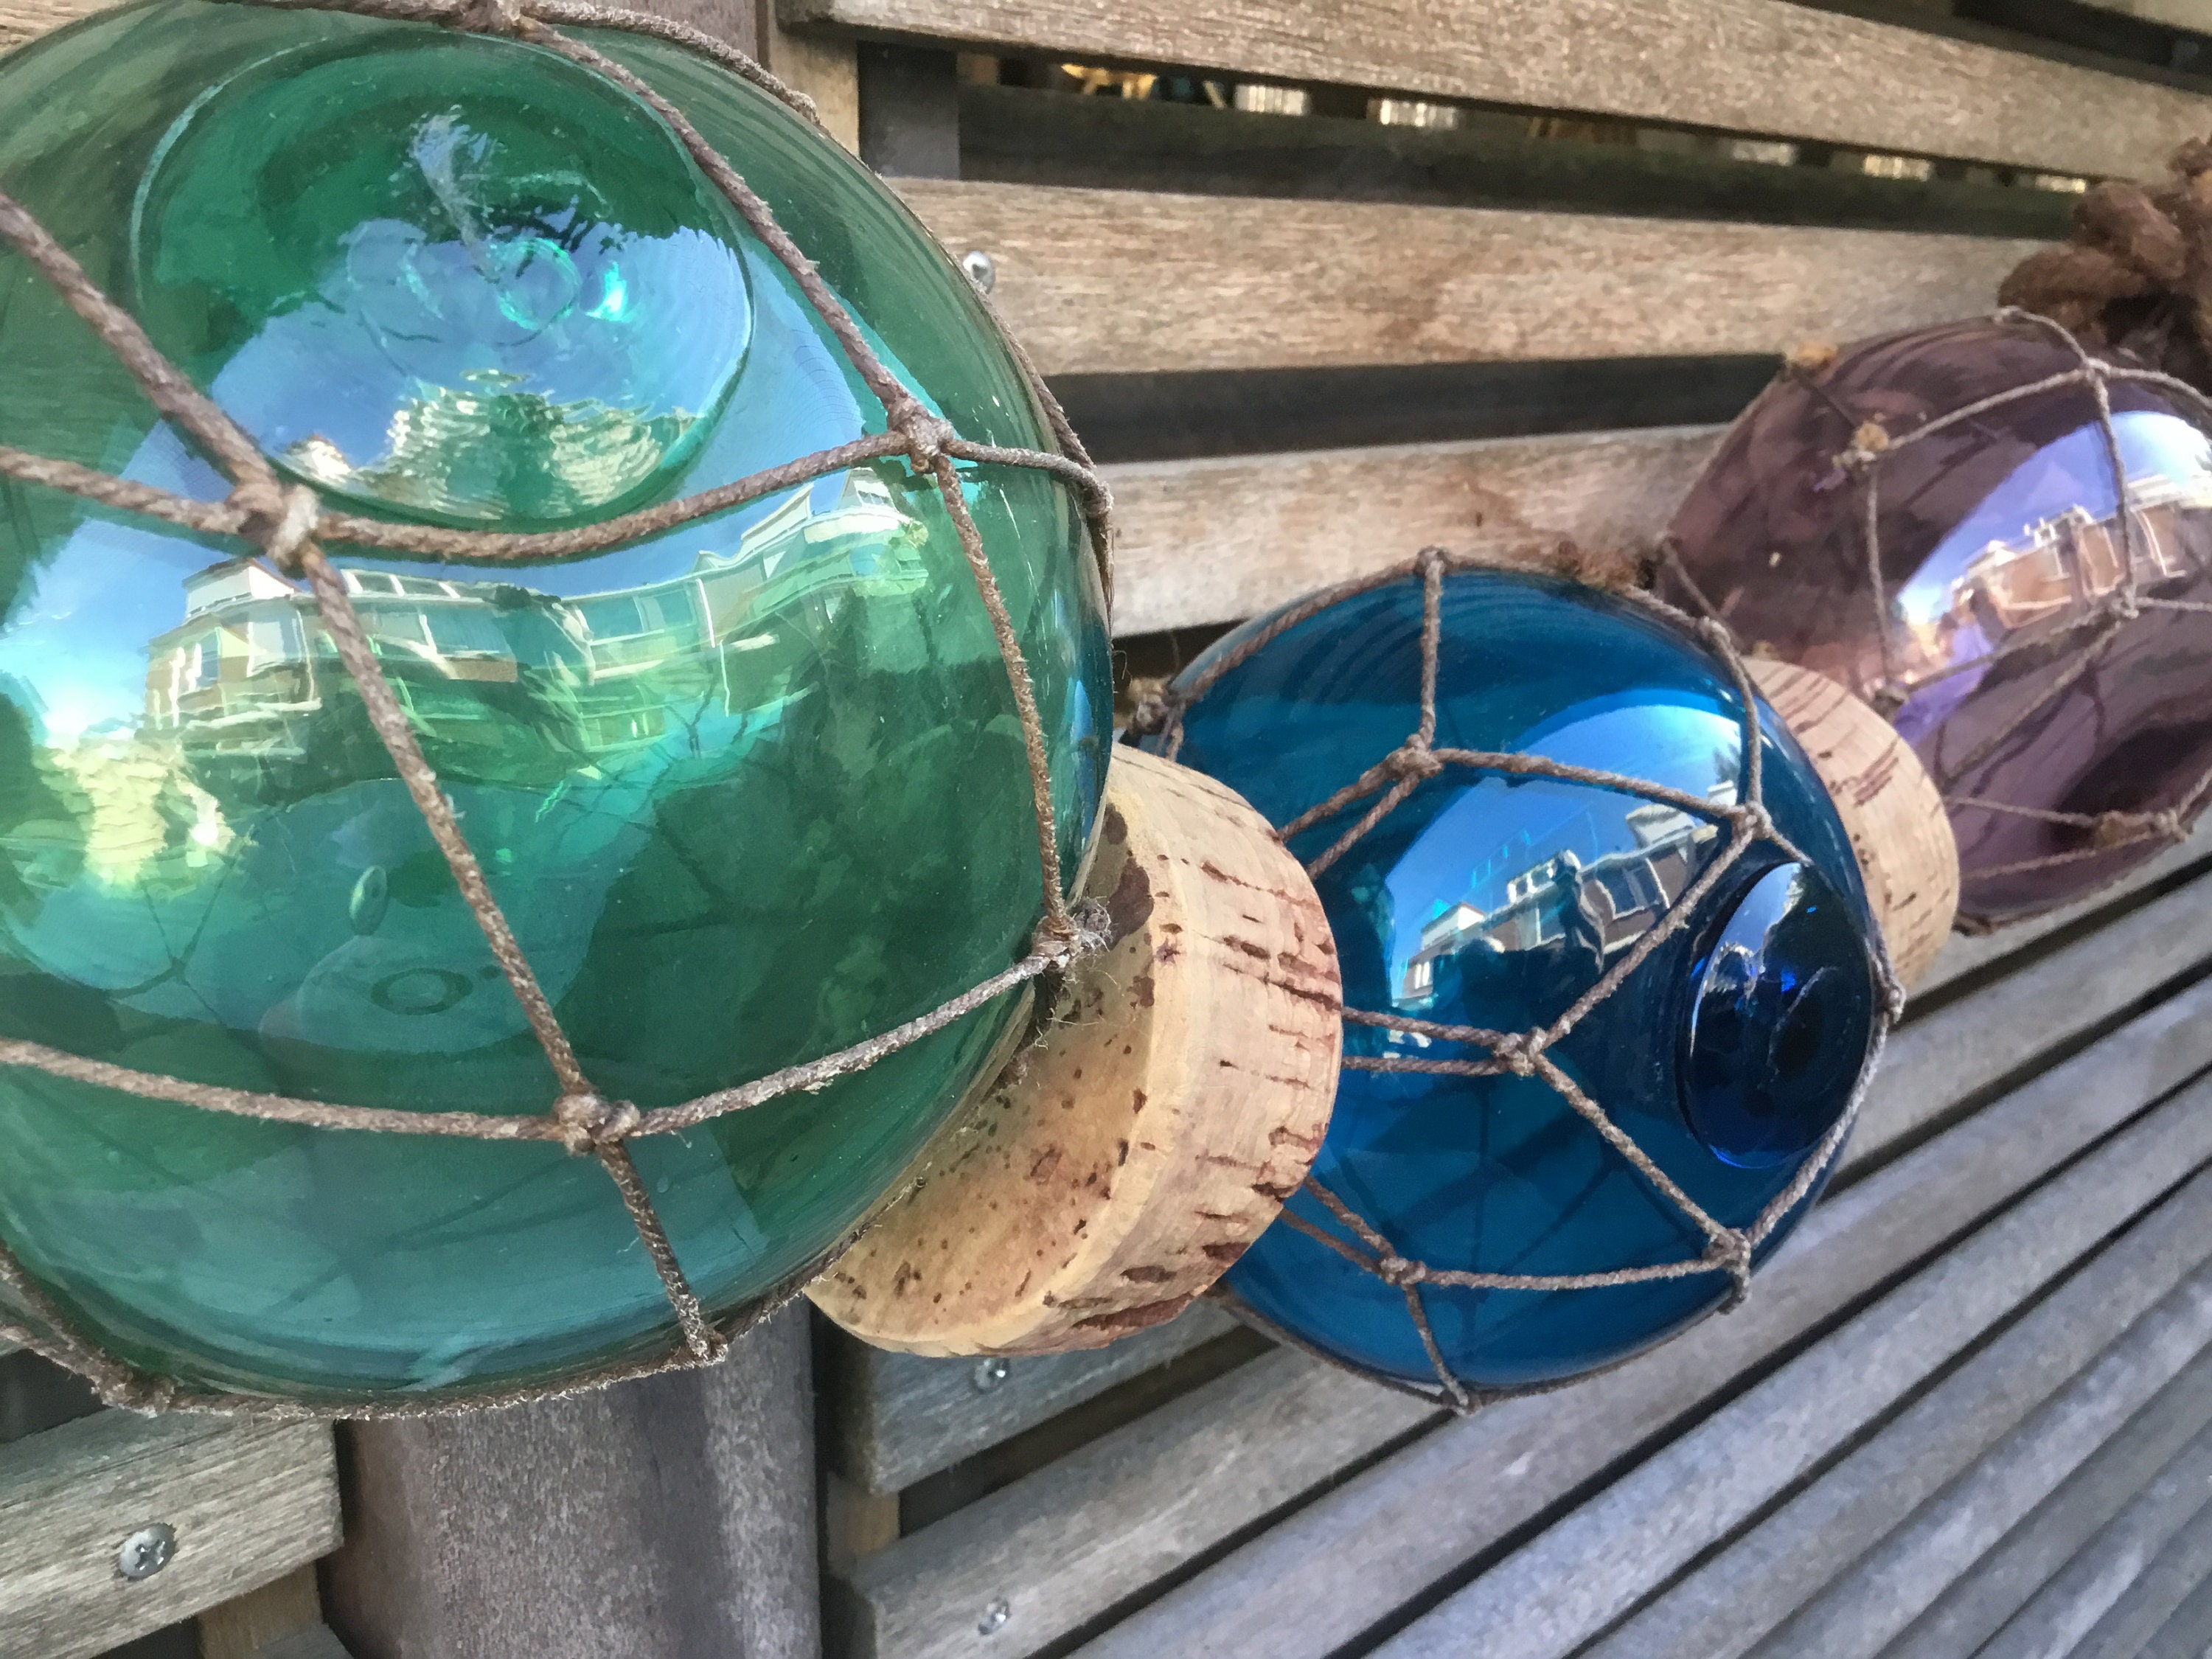 6 Glass Fishing Floats On Rope - Aqua & Cobalt Blue Styles - Fish Net Buoy  Ball - Nautical Beach Decor - w/ Jute Rope Netting